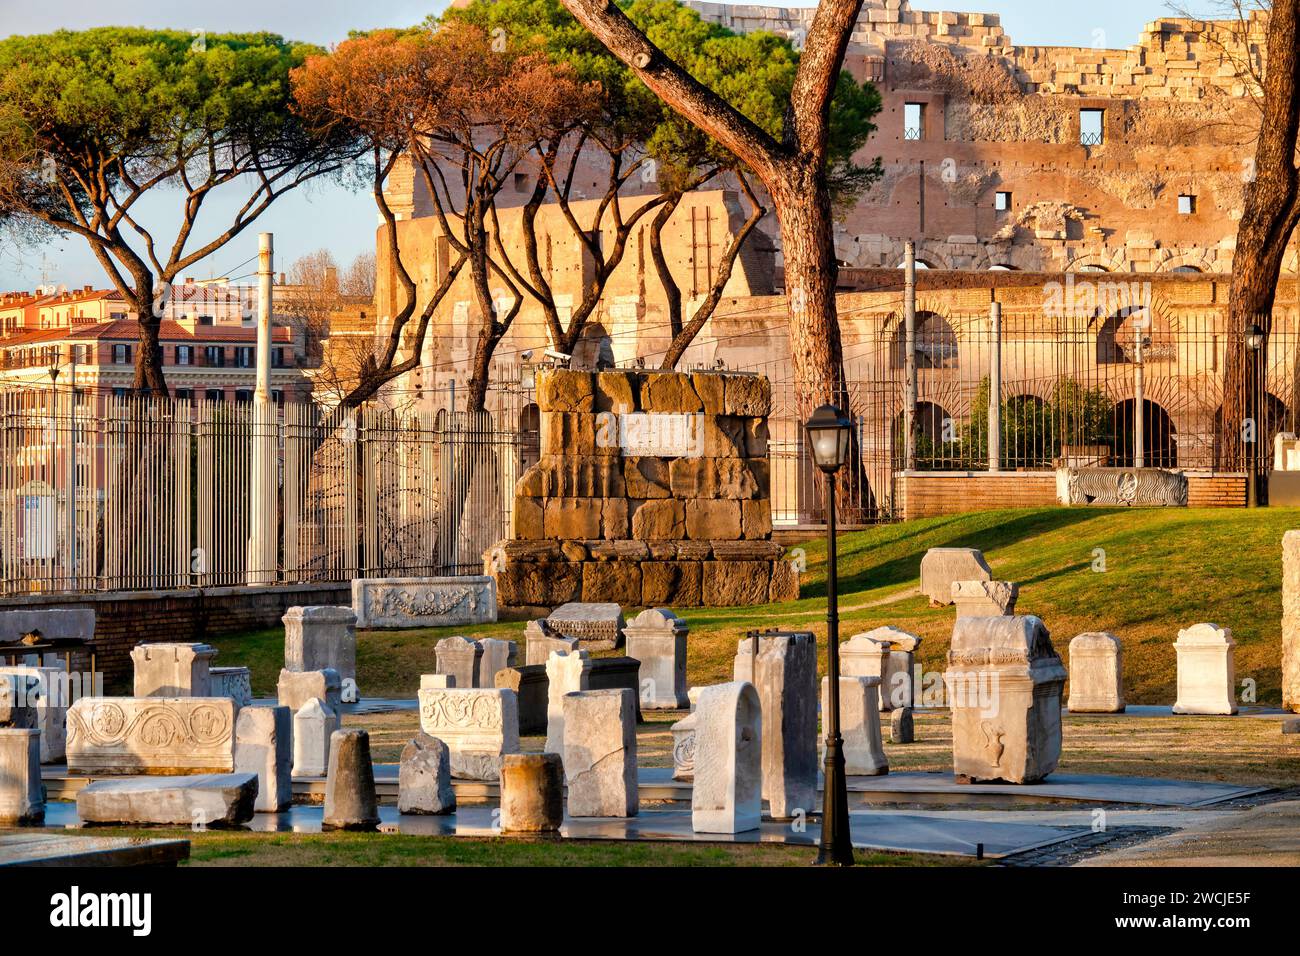 View of the Parco archeologico del Celio, Rome, Italy Stock Photo